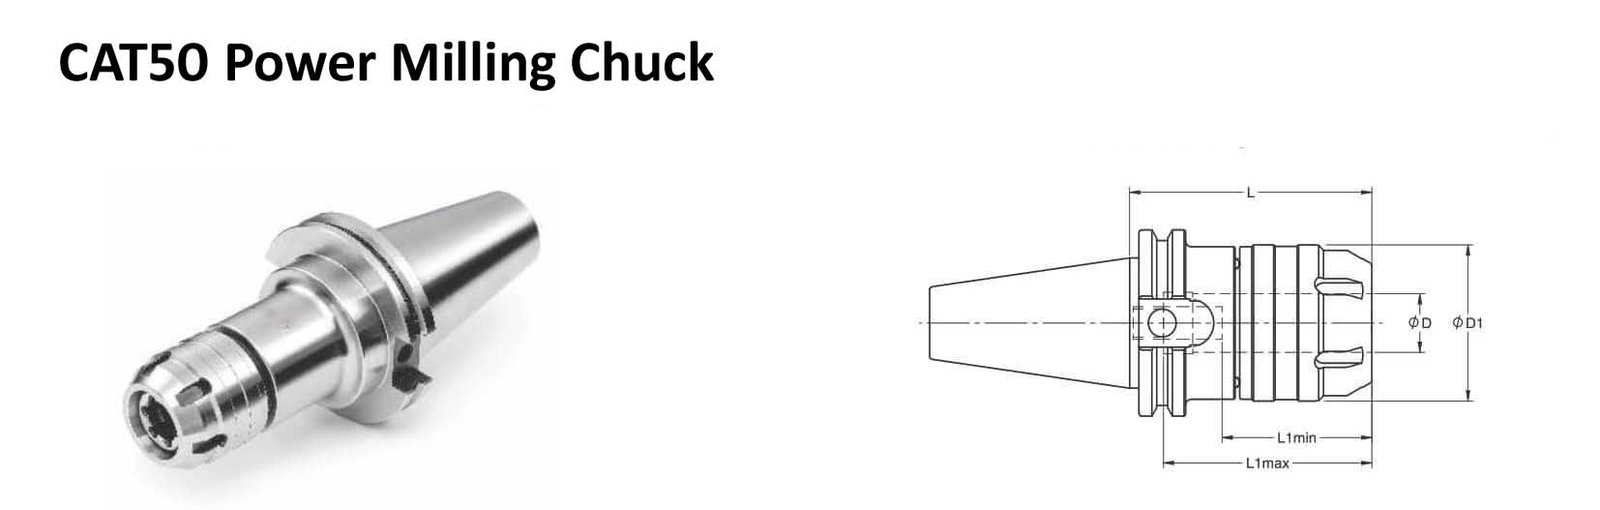 CAT50 C 0.750 - 3.25 Power Milling Chuck (Balanced to 2.5G 25000 rpm)